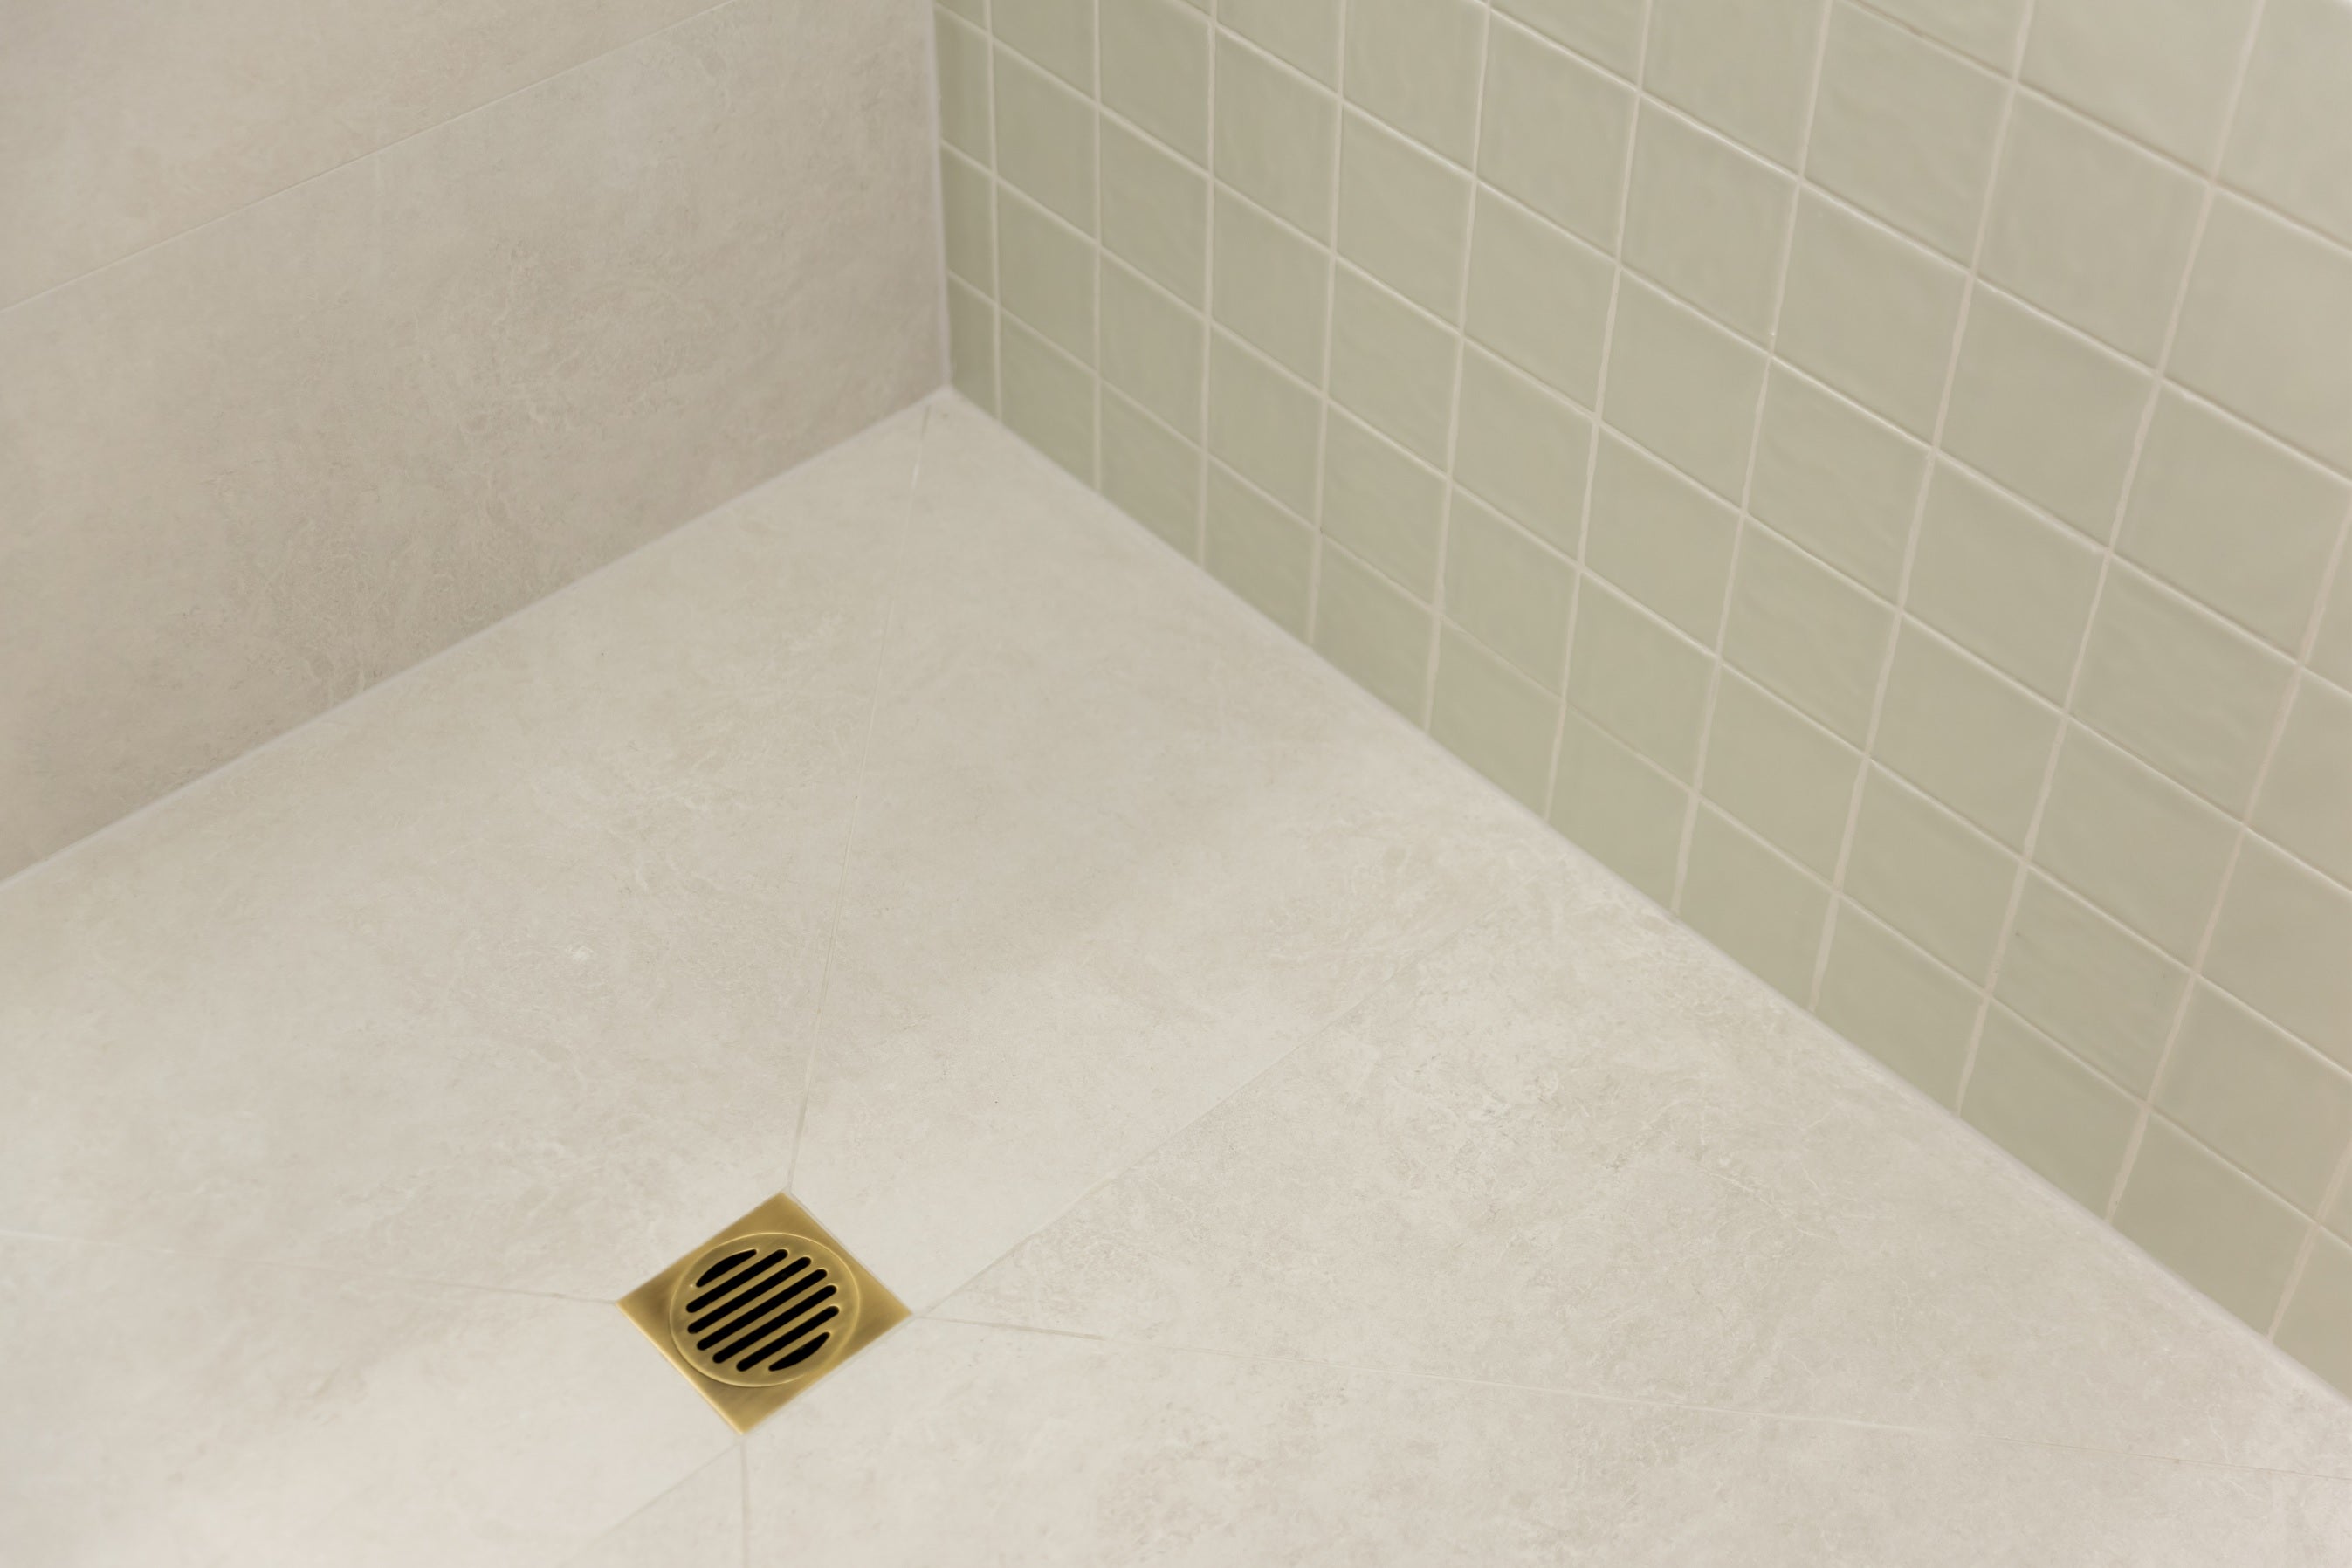 Square Floor Grate Shower Drain 100mm outlet - PVD Tiger Bronze